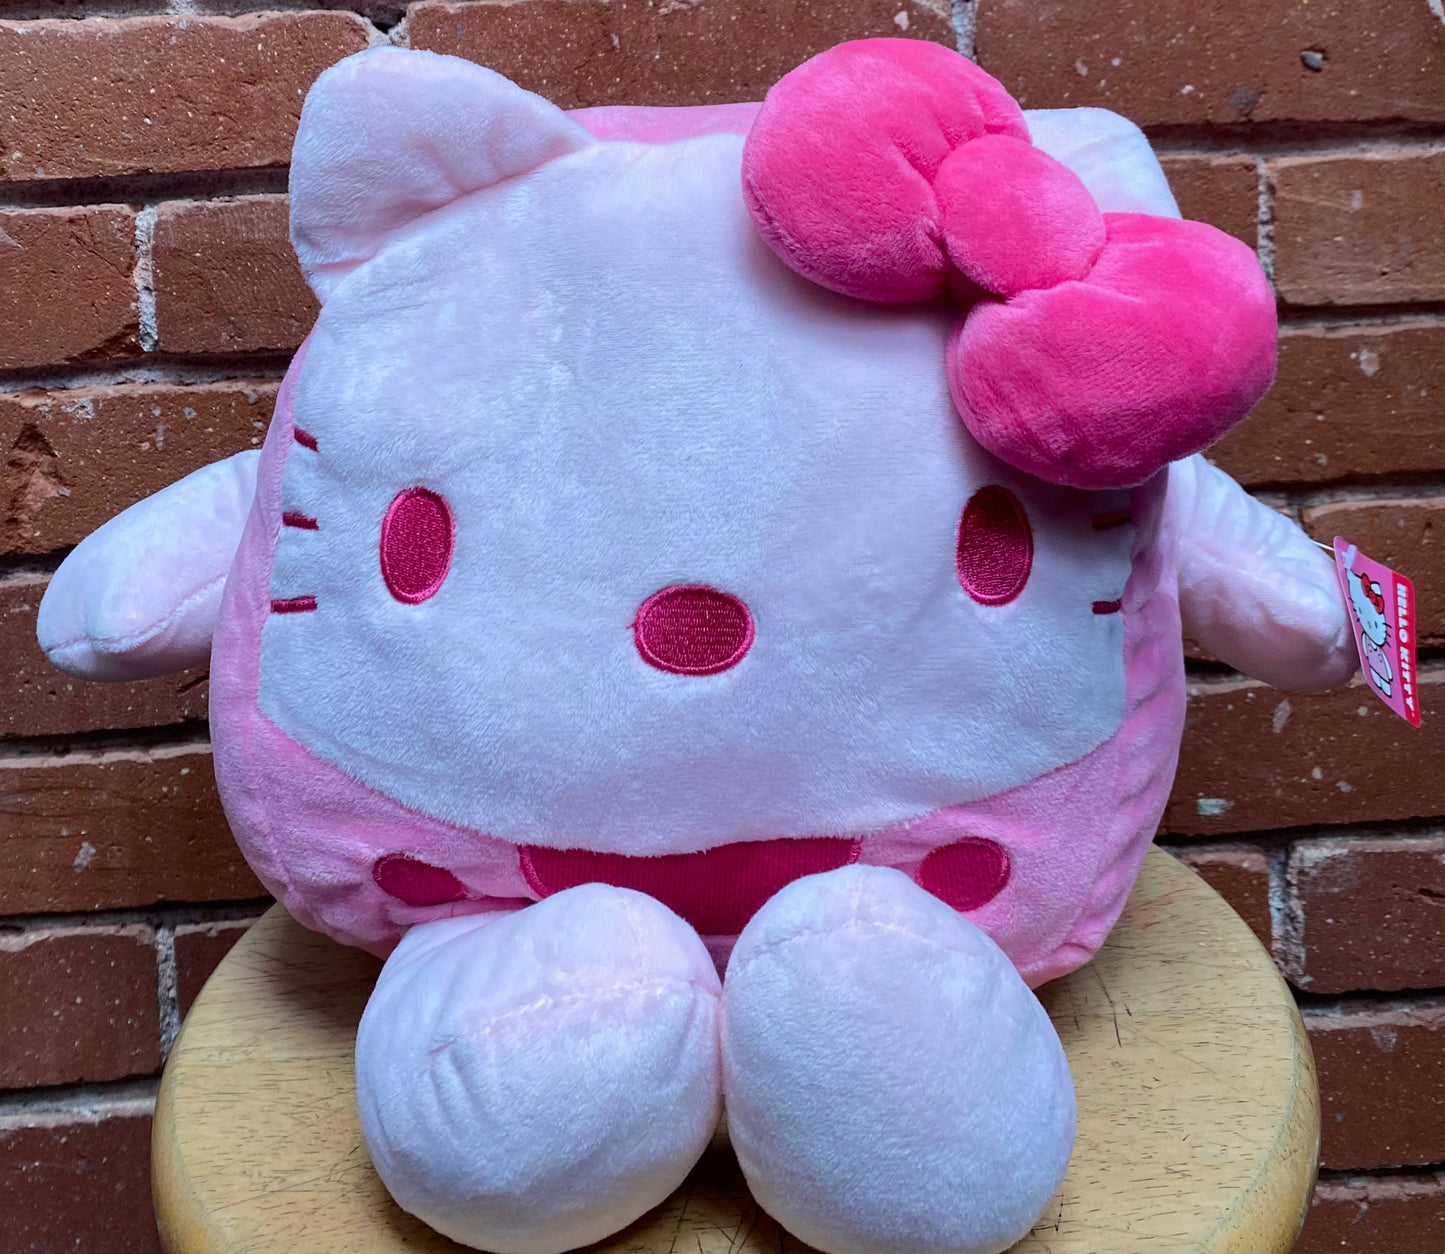 Hello Kitty Pink on Pink Cube Plush